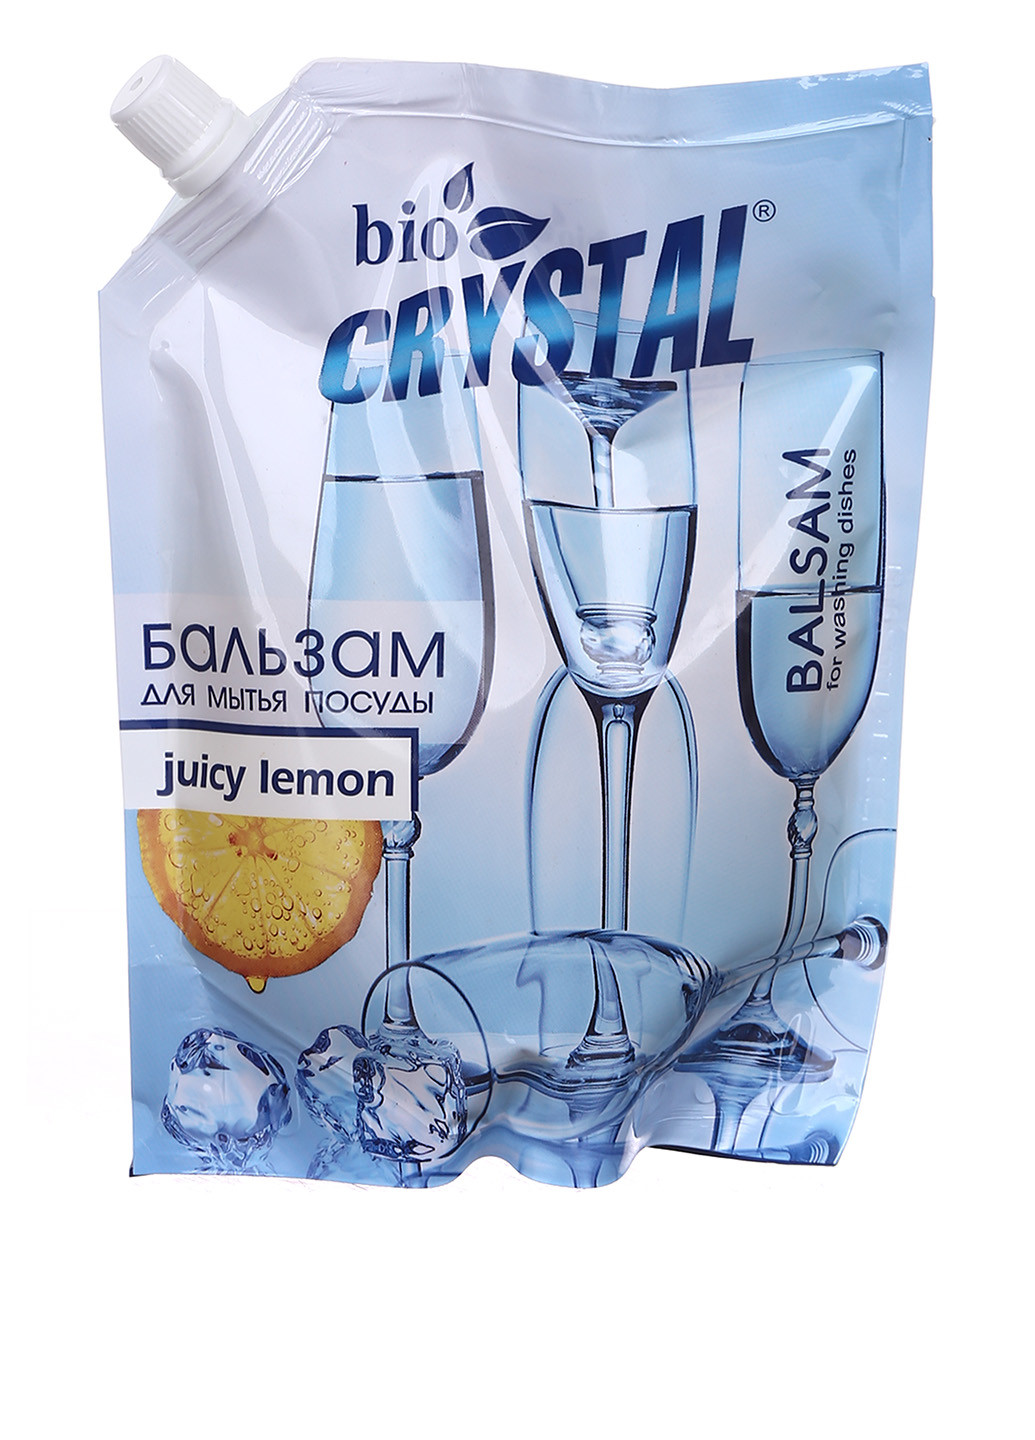 Бальзам для мытья посуды "Juicy lemon", 450 мл Bio Crystal (16868396)